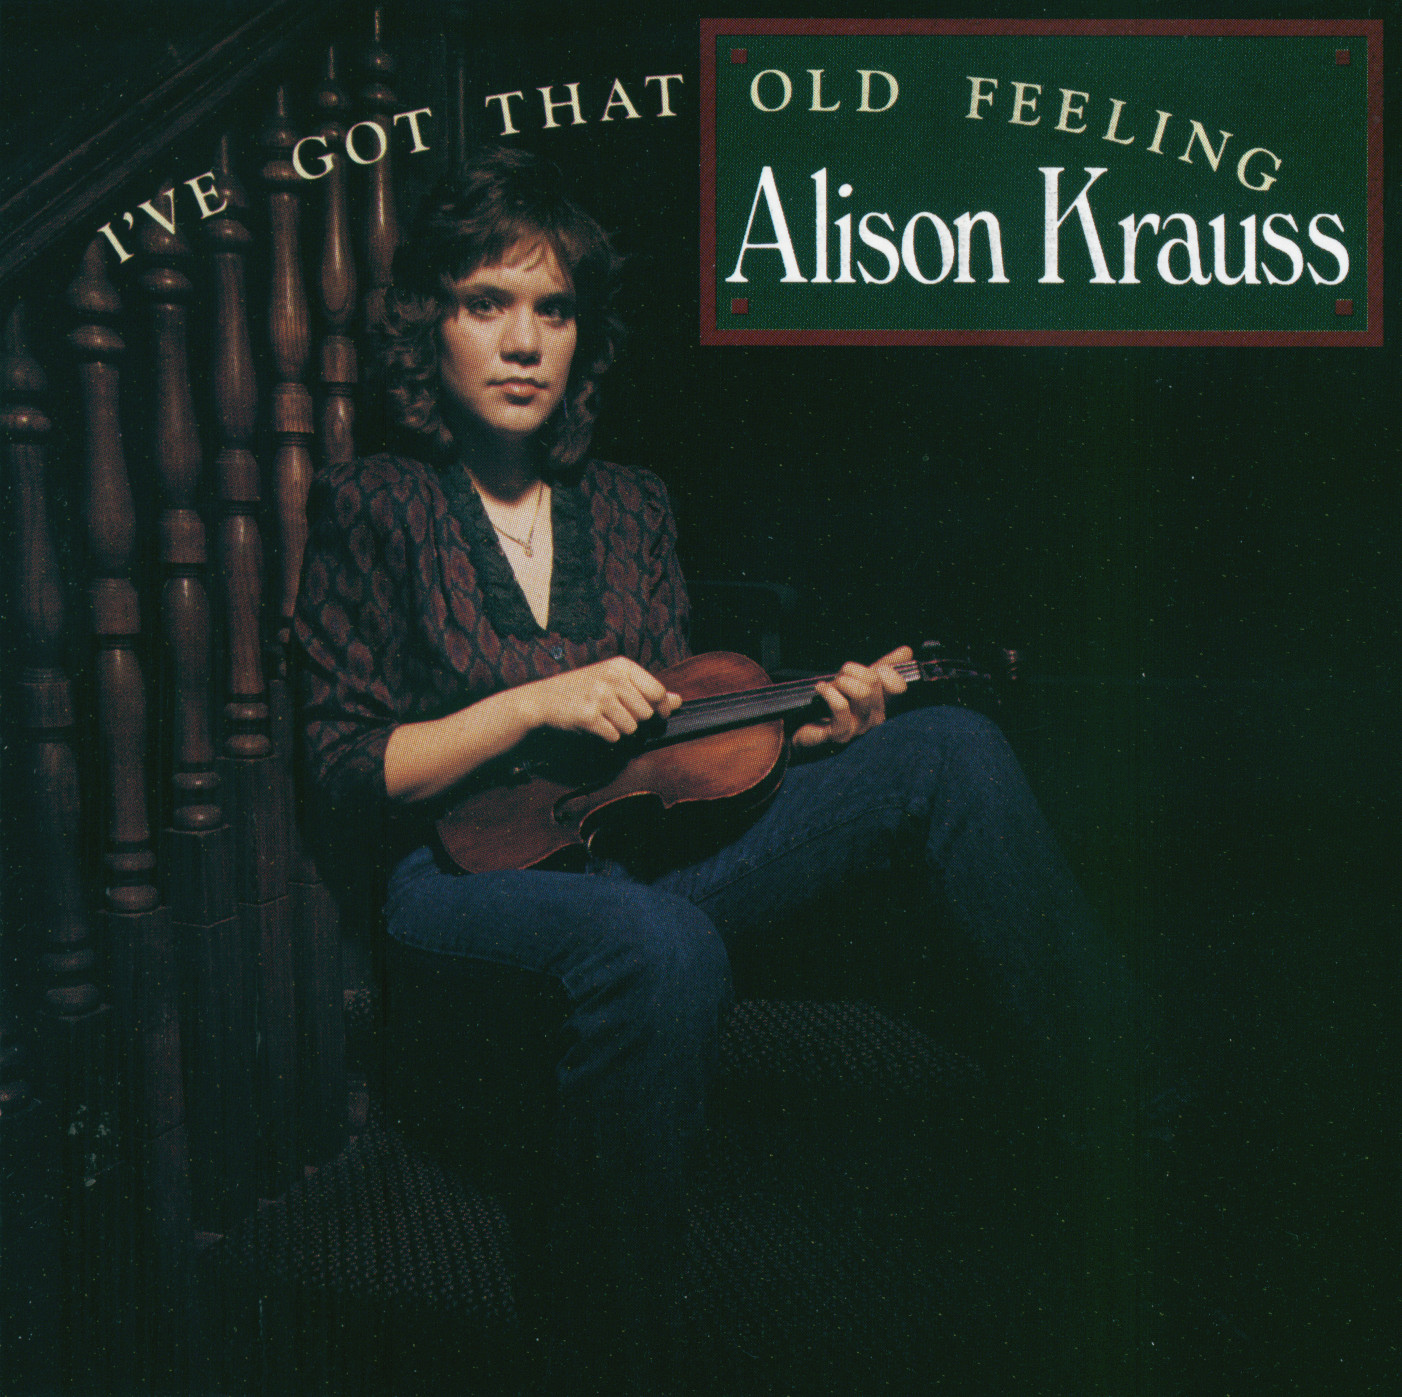 Release “I’ve Got That Old Feeling” by Alison Krauss - Tags - MusicBrainz